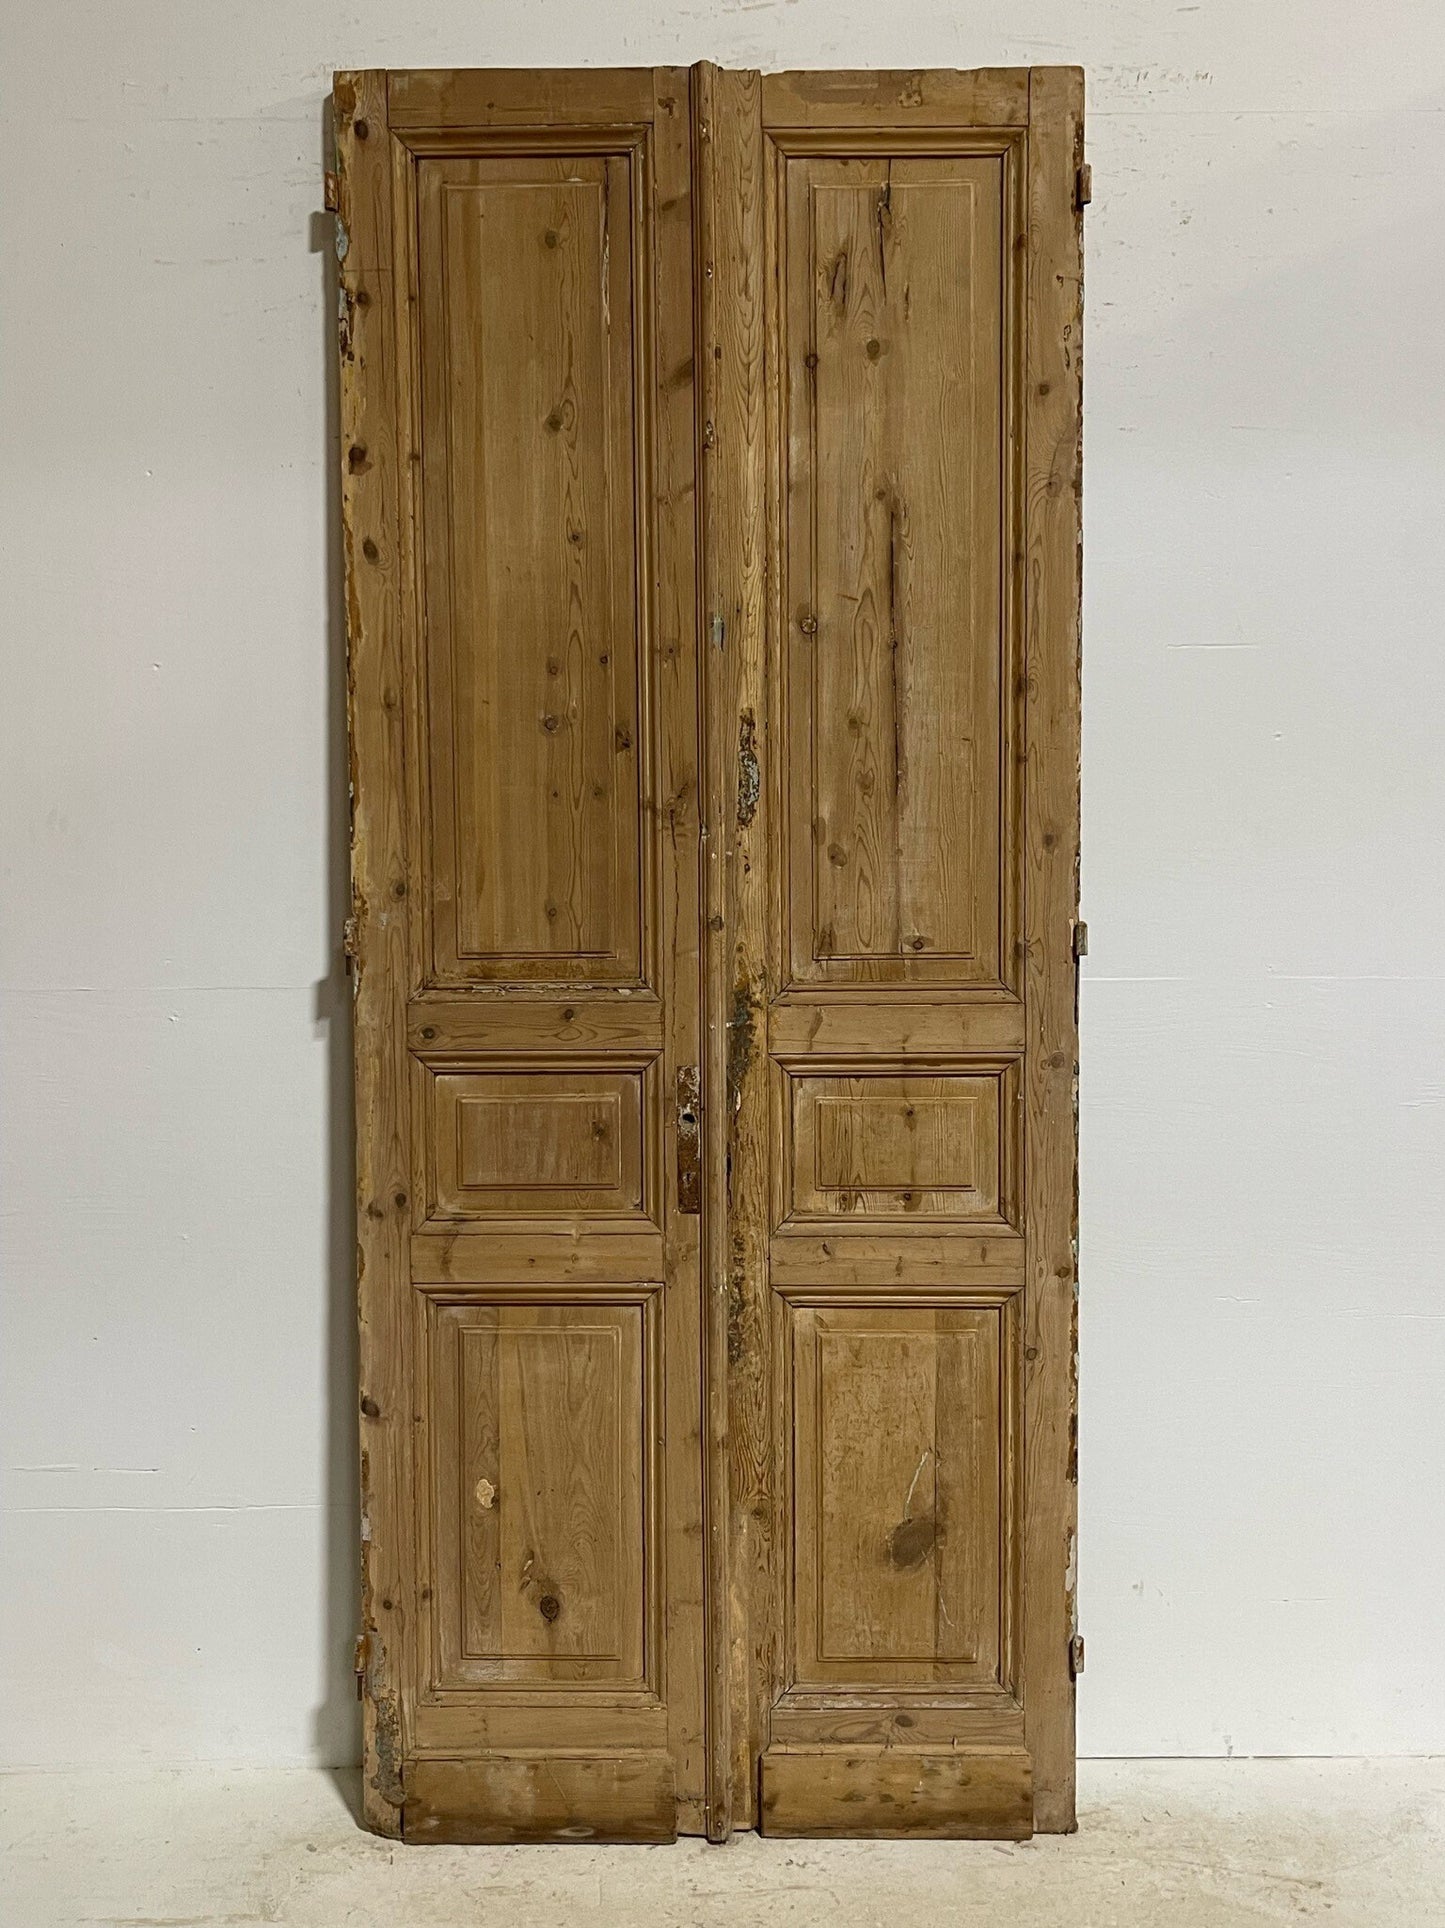 Antique French doors (97.5X40.75) G0109